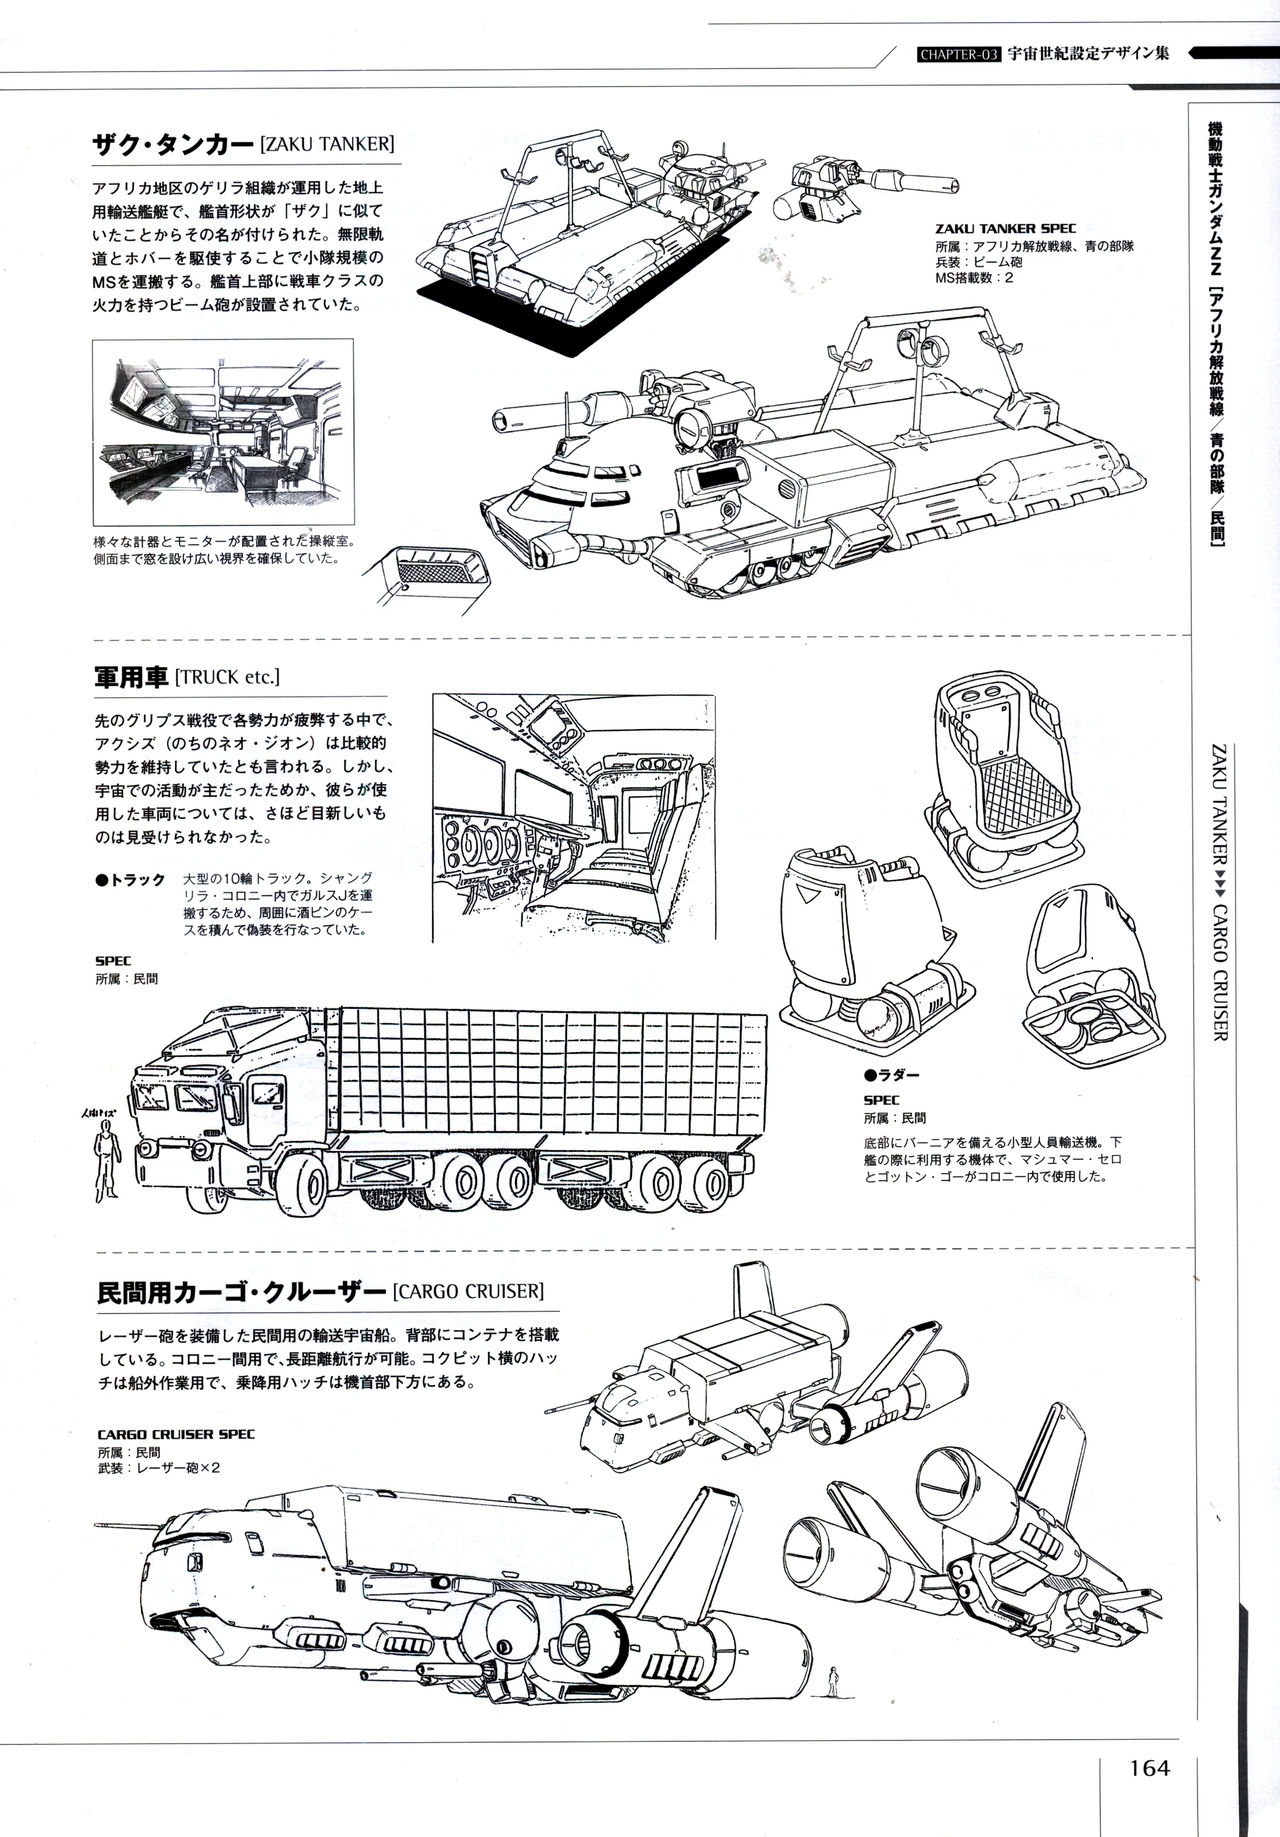 Mobile Suit Gundam - Ship & Aerospace Plane Encyclopedia - Revised Edition 169